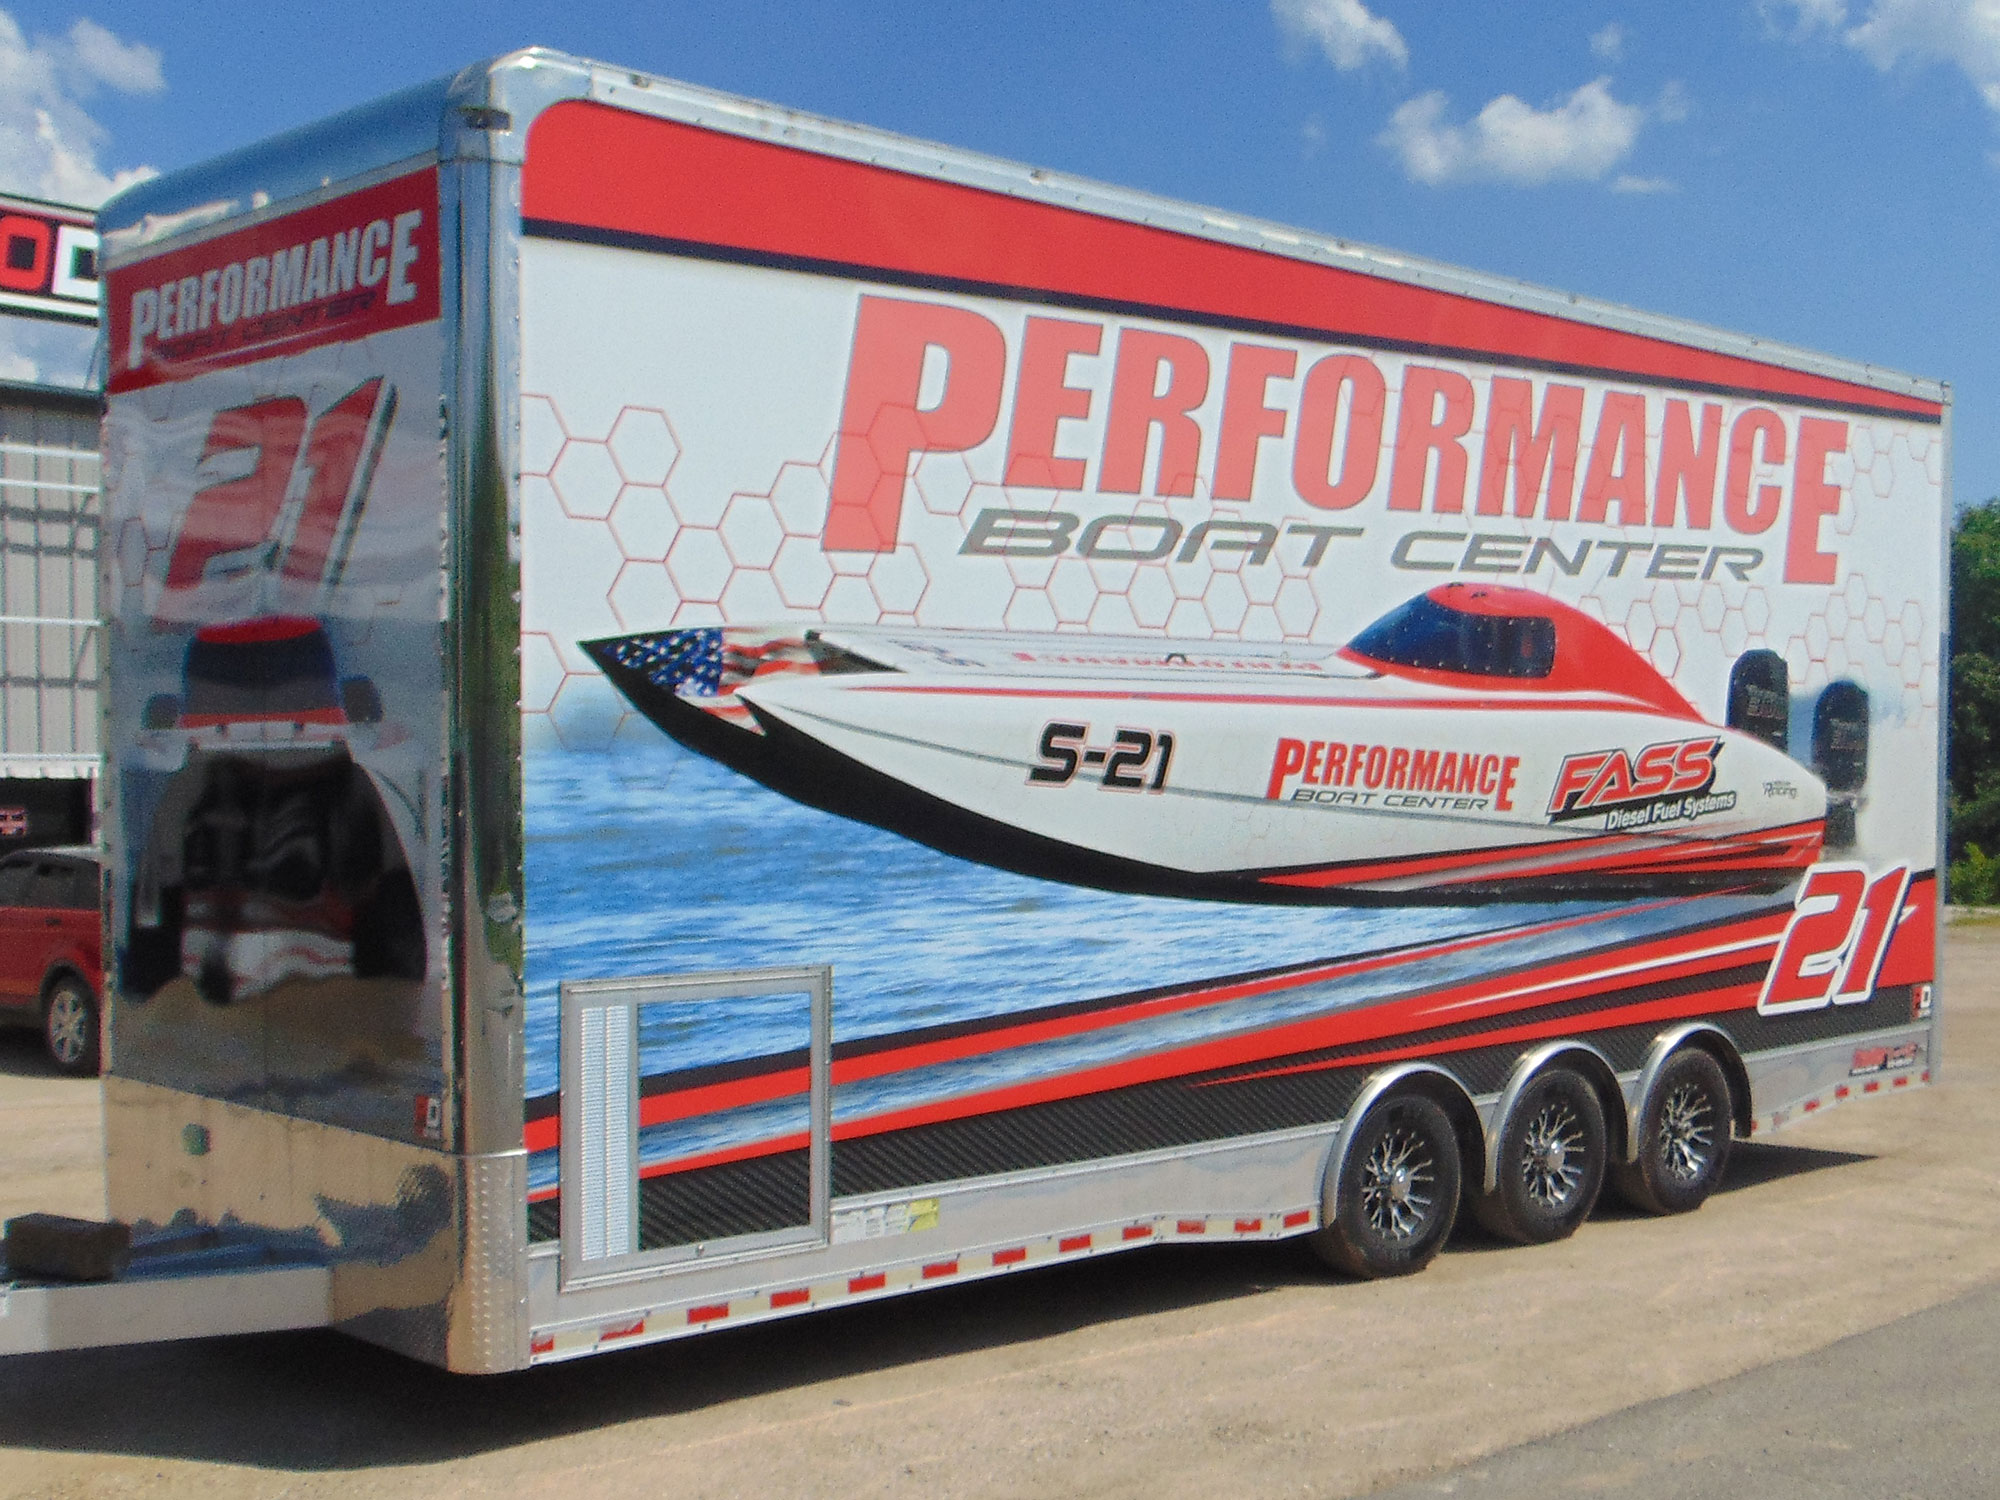 Performance Boat Center Vinyl Wraps Motor Sports Racing Trailers High Performance Pro Dezigns Jefferson City Missouri